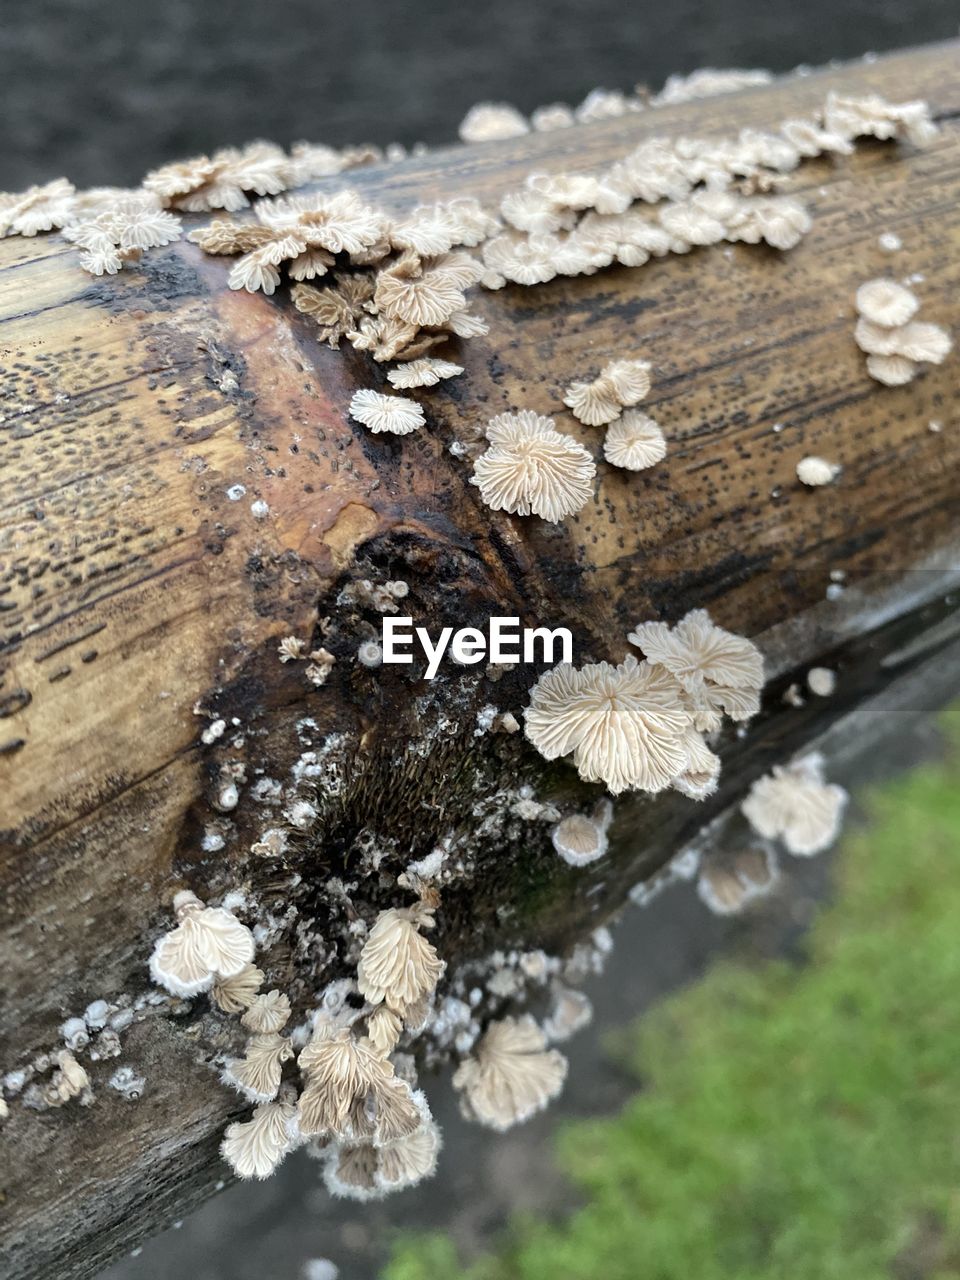 CLOSE-UP OF MUSHROOM GROWING ON TREE TRUNK